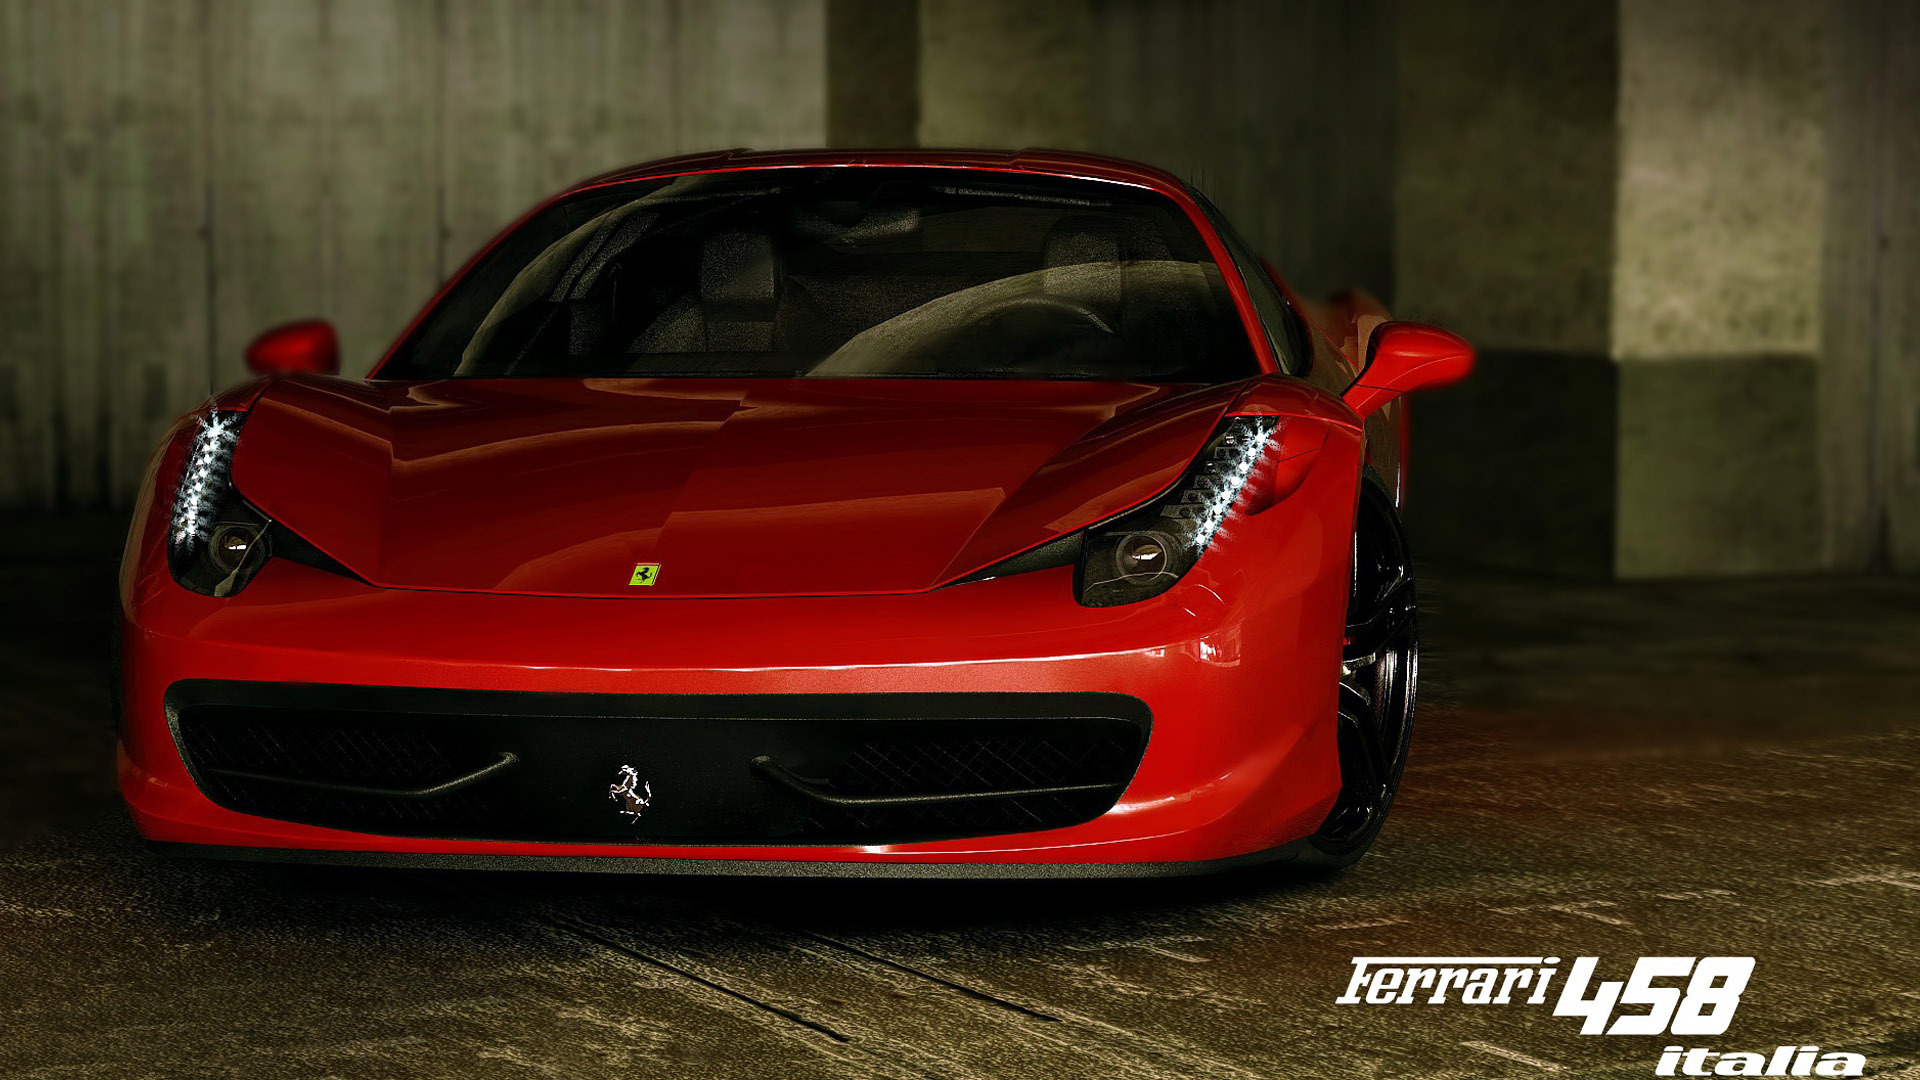 Ferrari 458 Italia wallpaper   699705 1920x1080